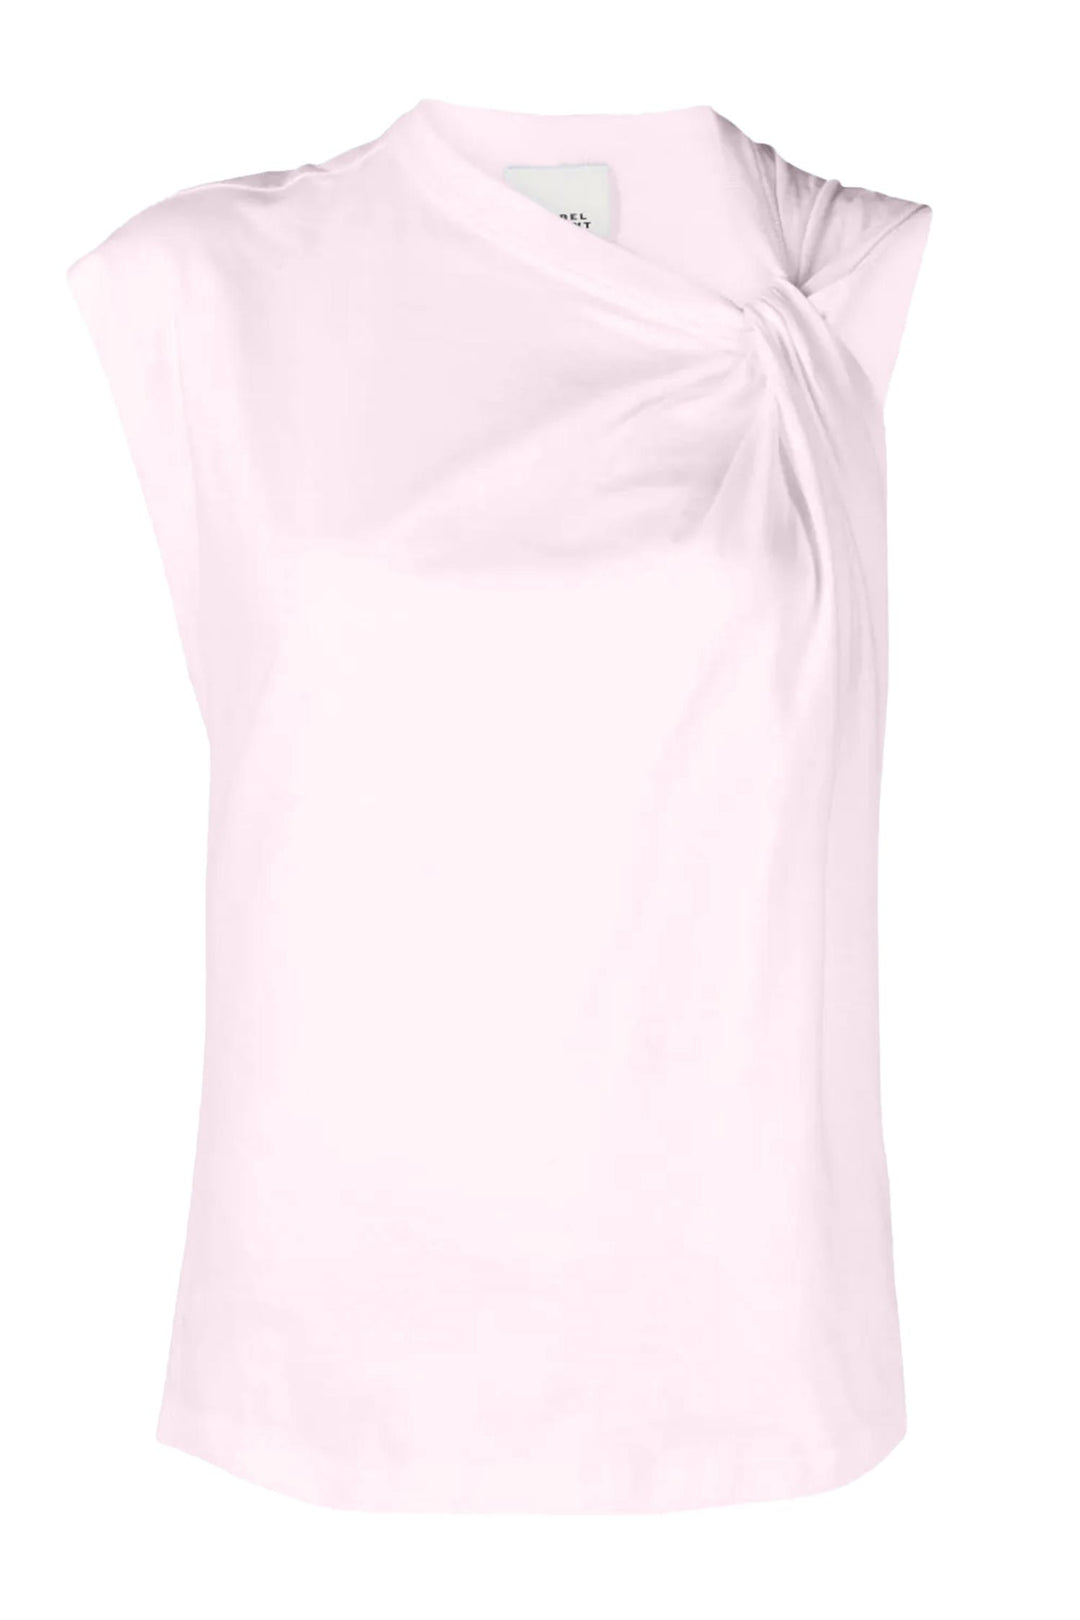 Nayda T-Shirt Light Pink